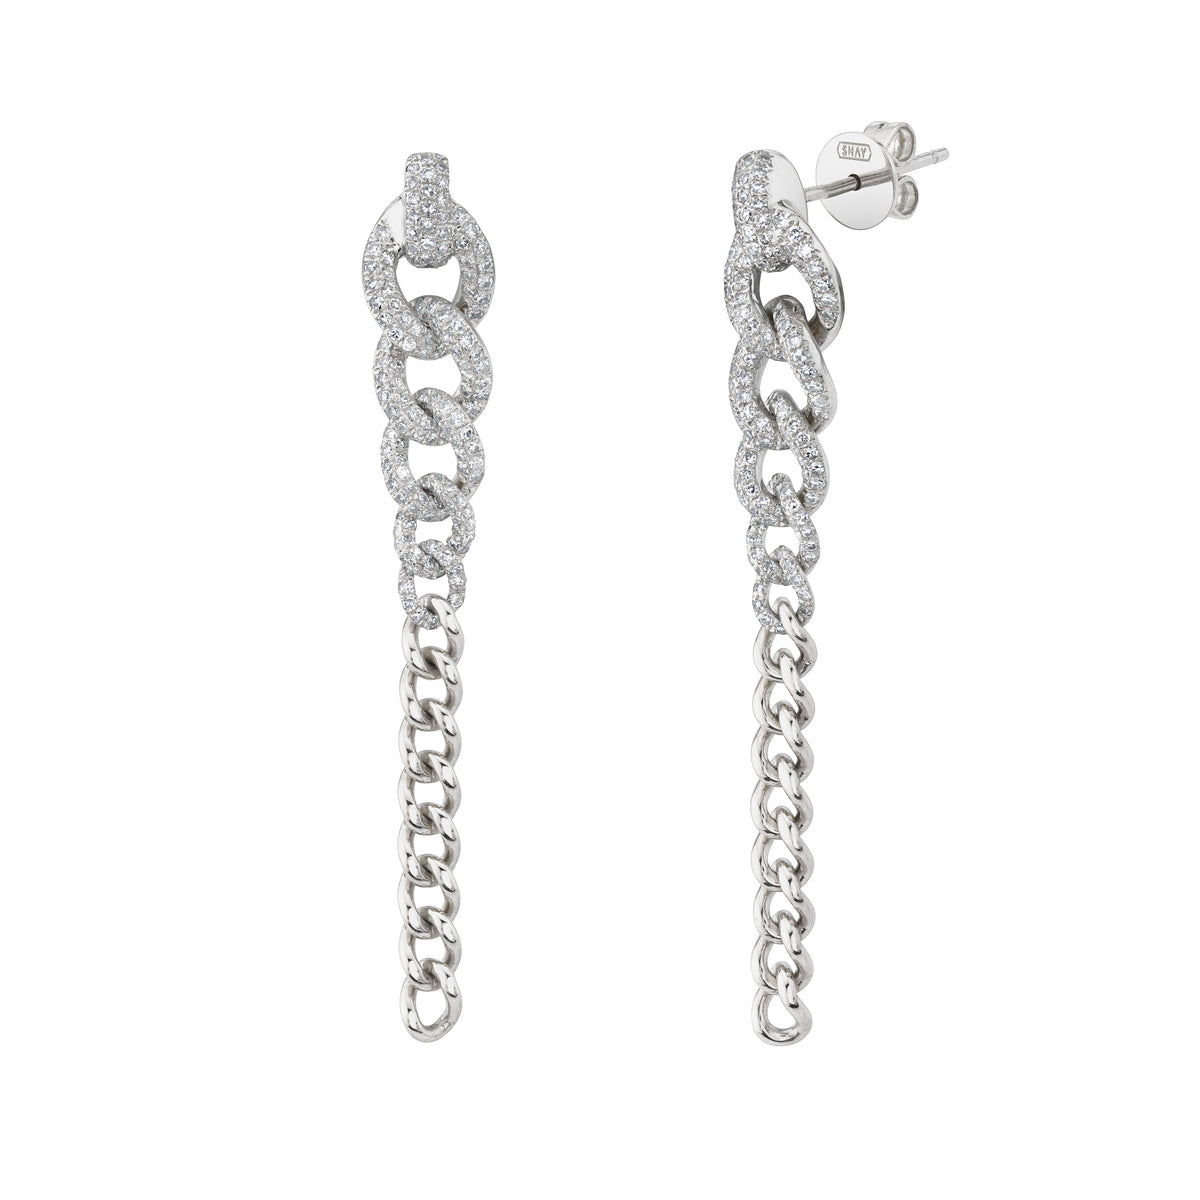 Diamond Drop Earrings - Pair Size 3mm | WWAKE